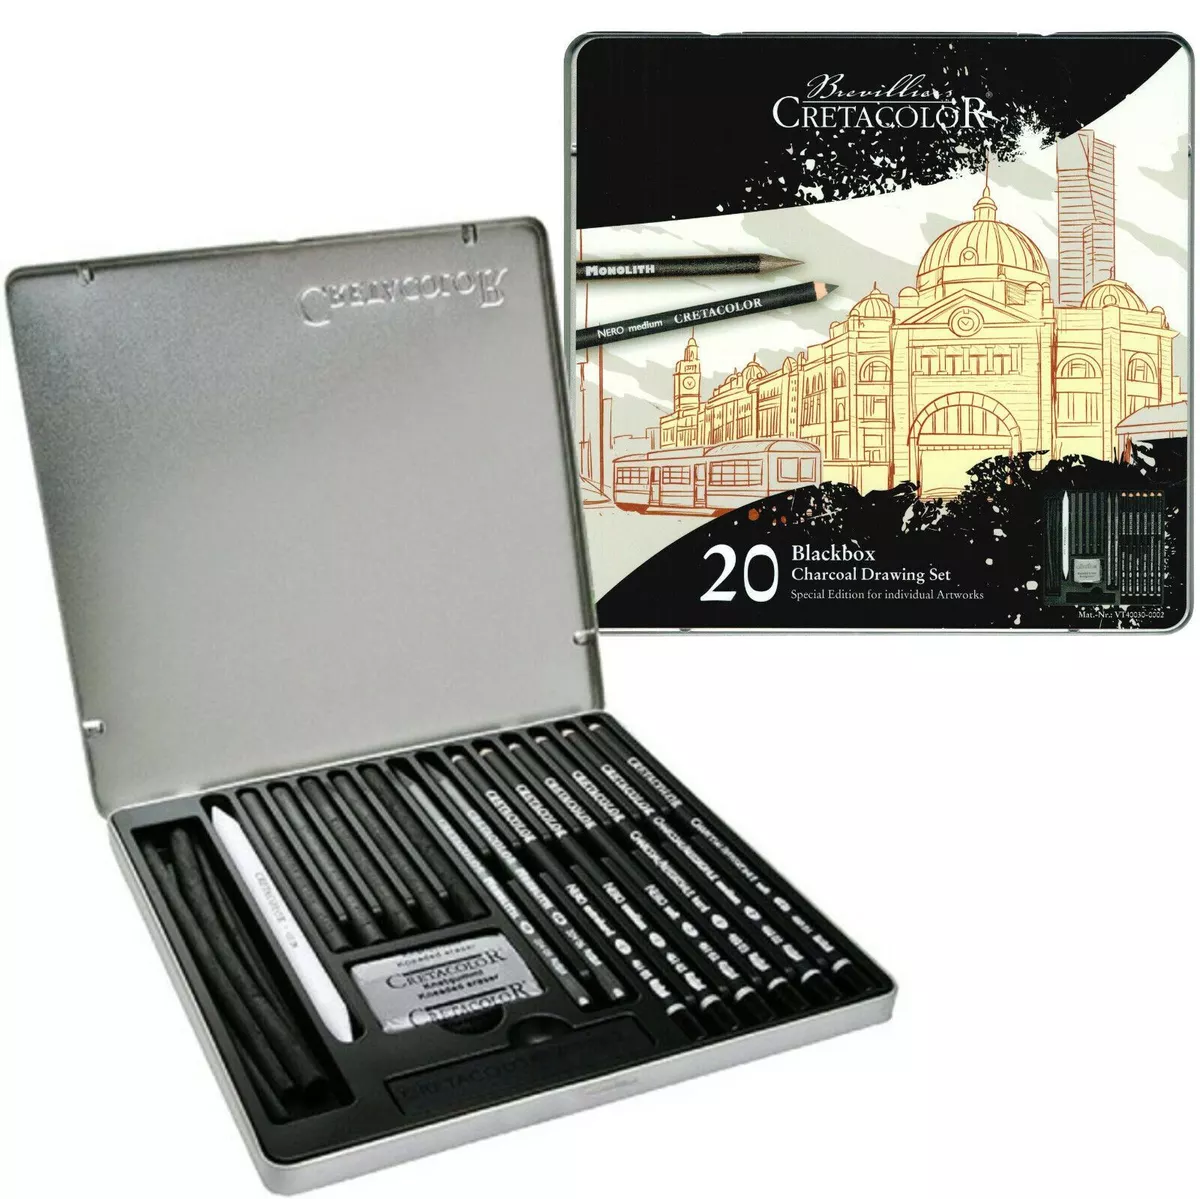 Cretacolor Special Edition Black Box Charcoal Drawing Set Flinders